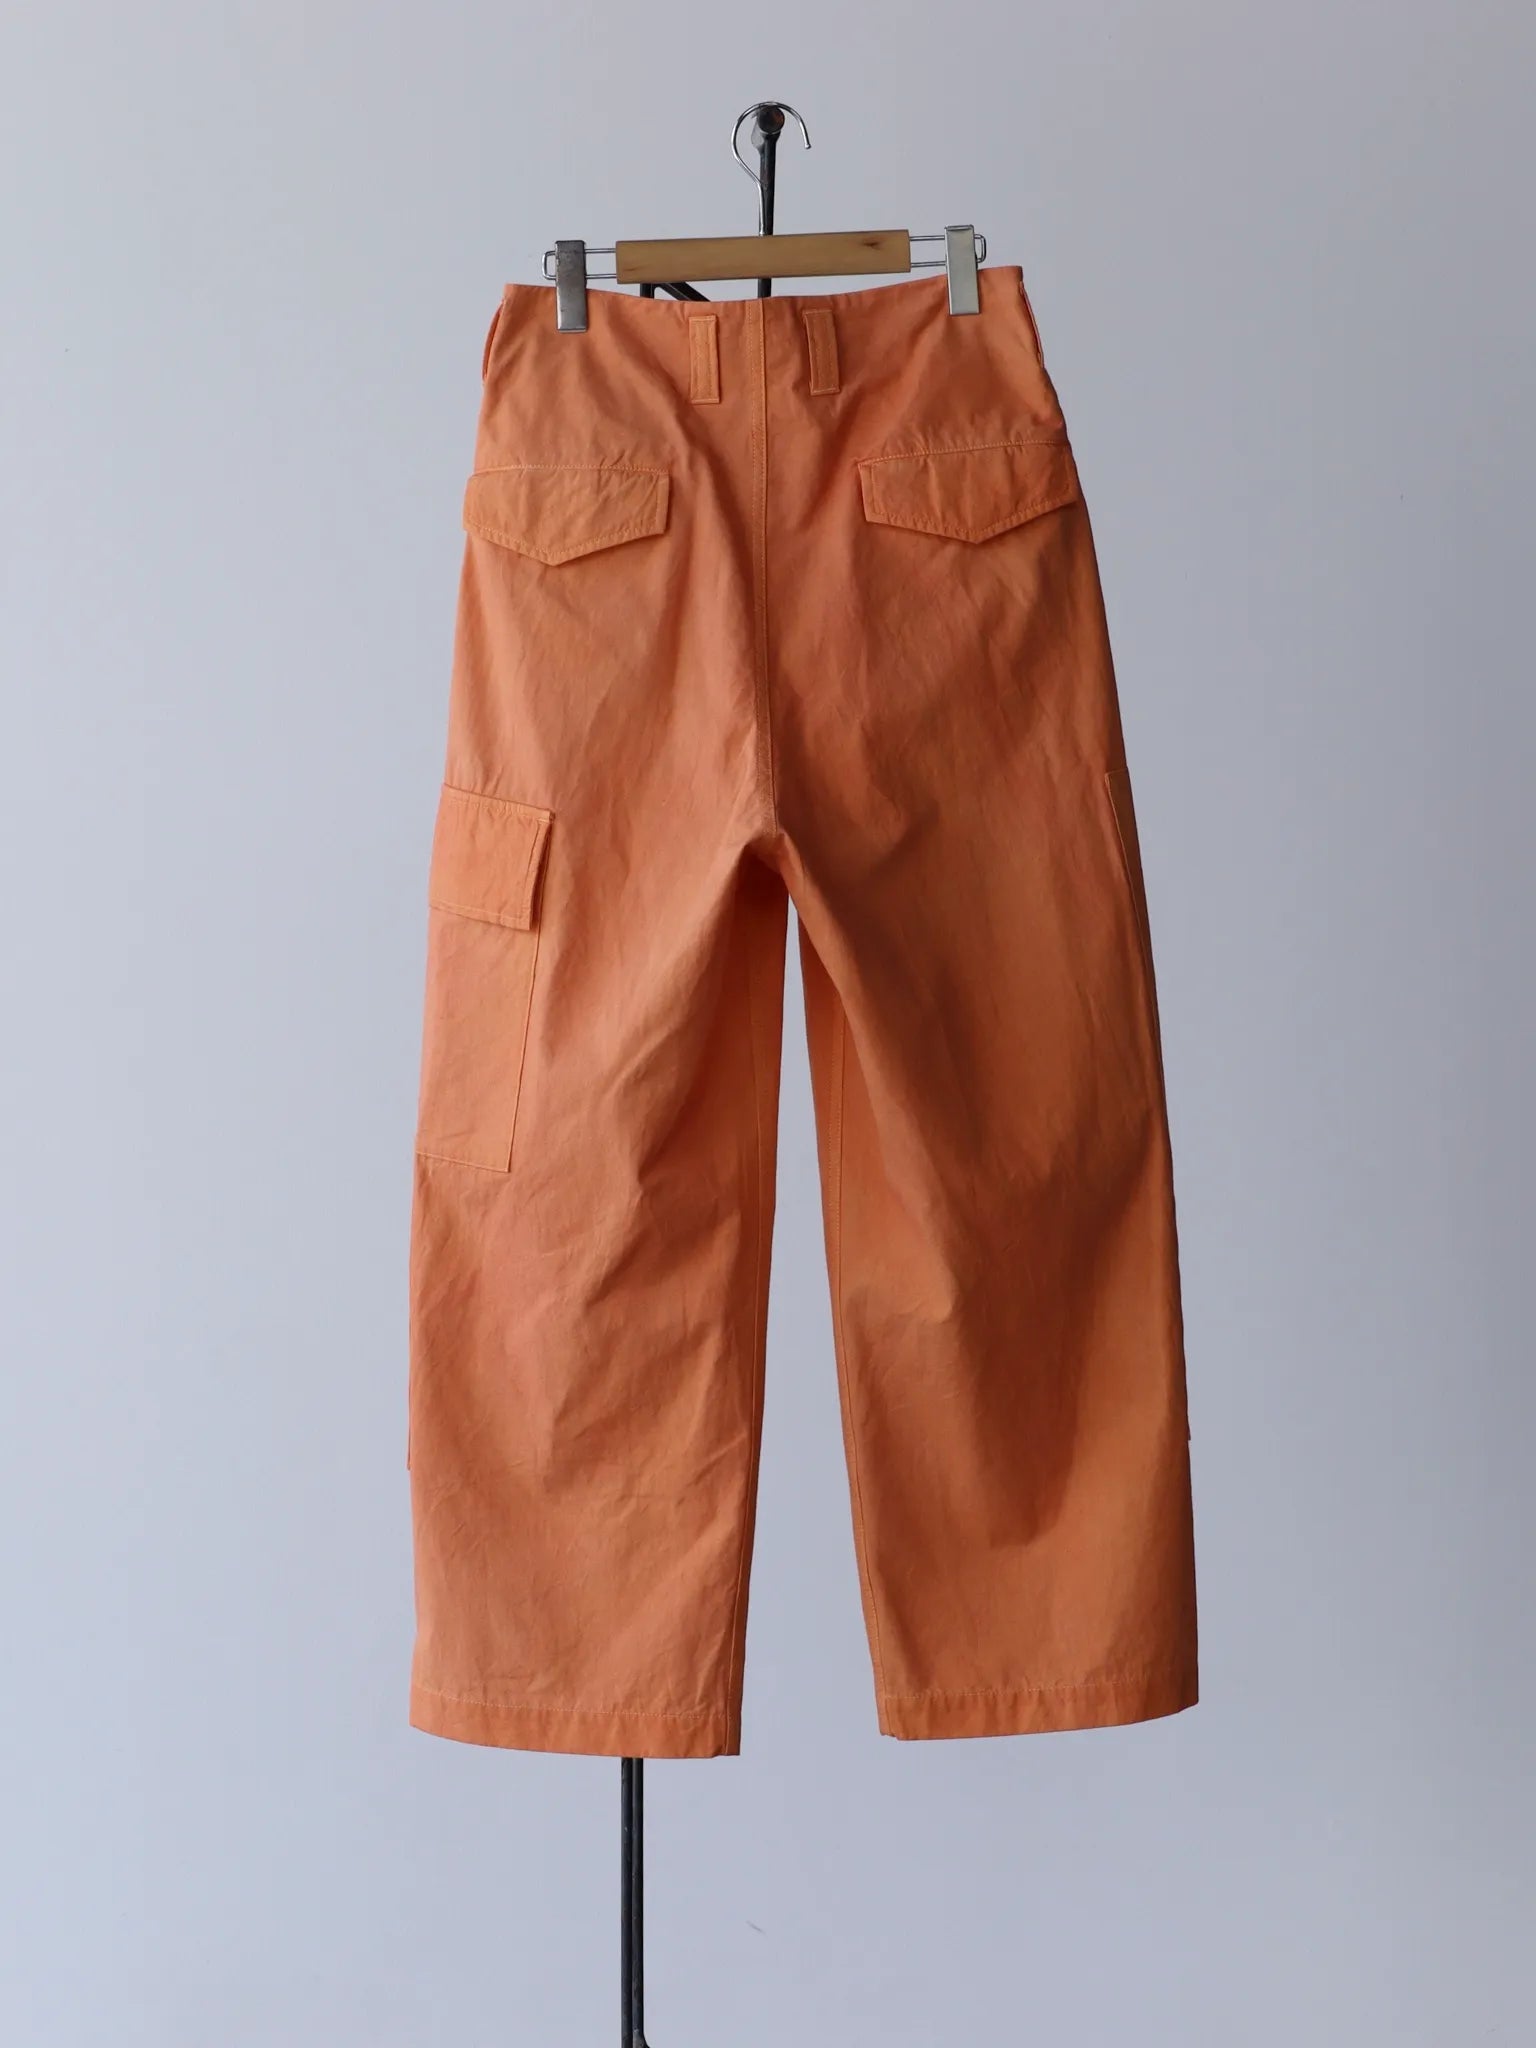 amachi-double-knee-cergo-pants-light-weight-orange-2